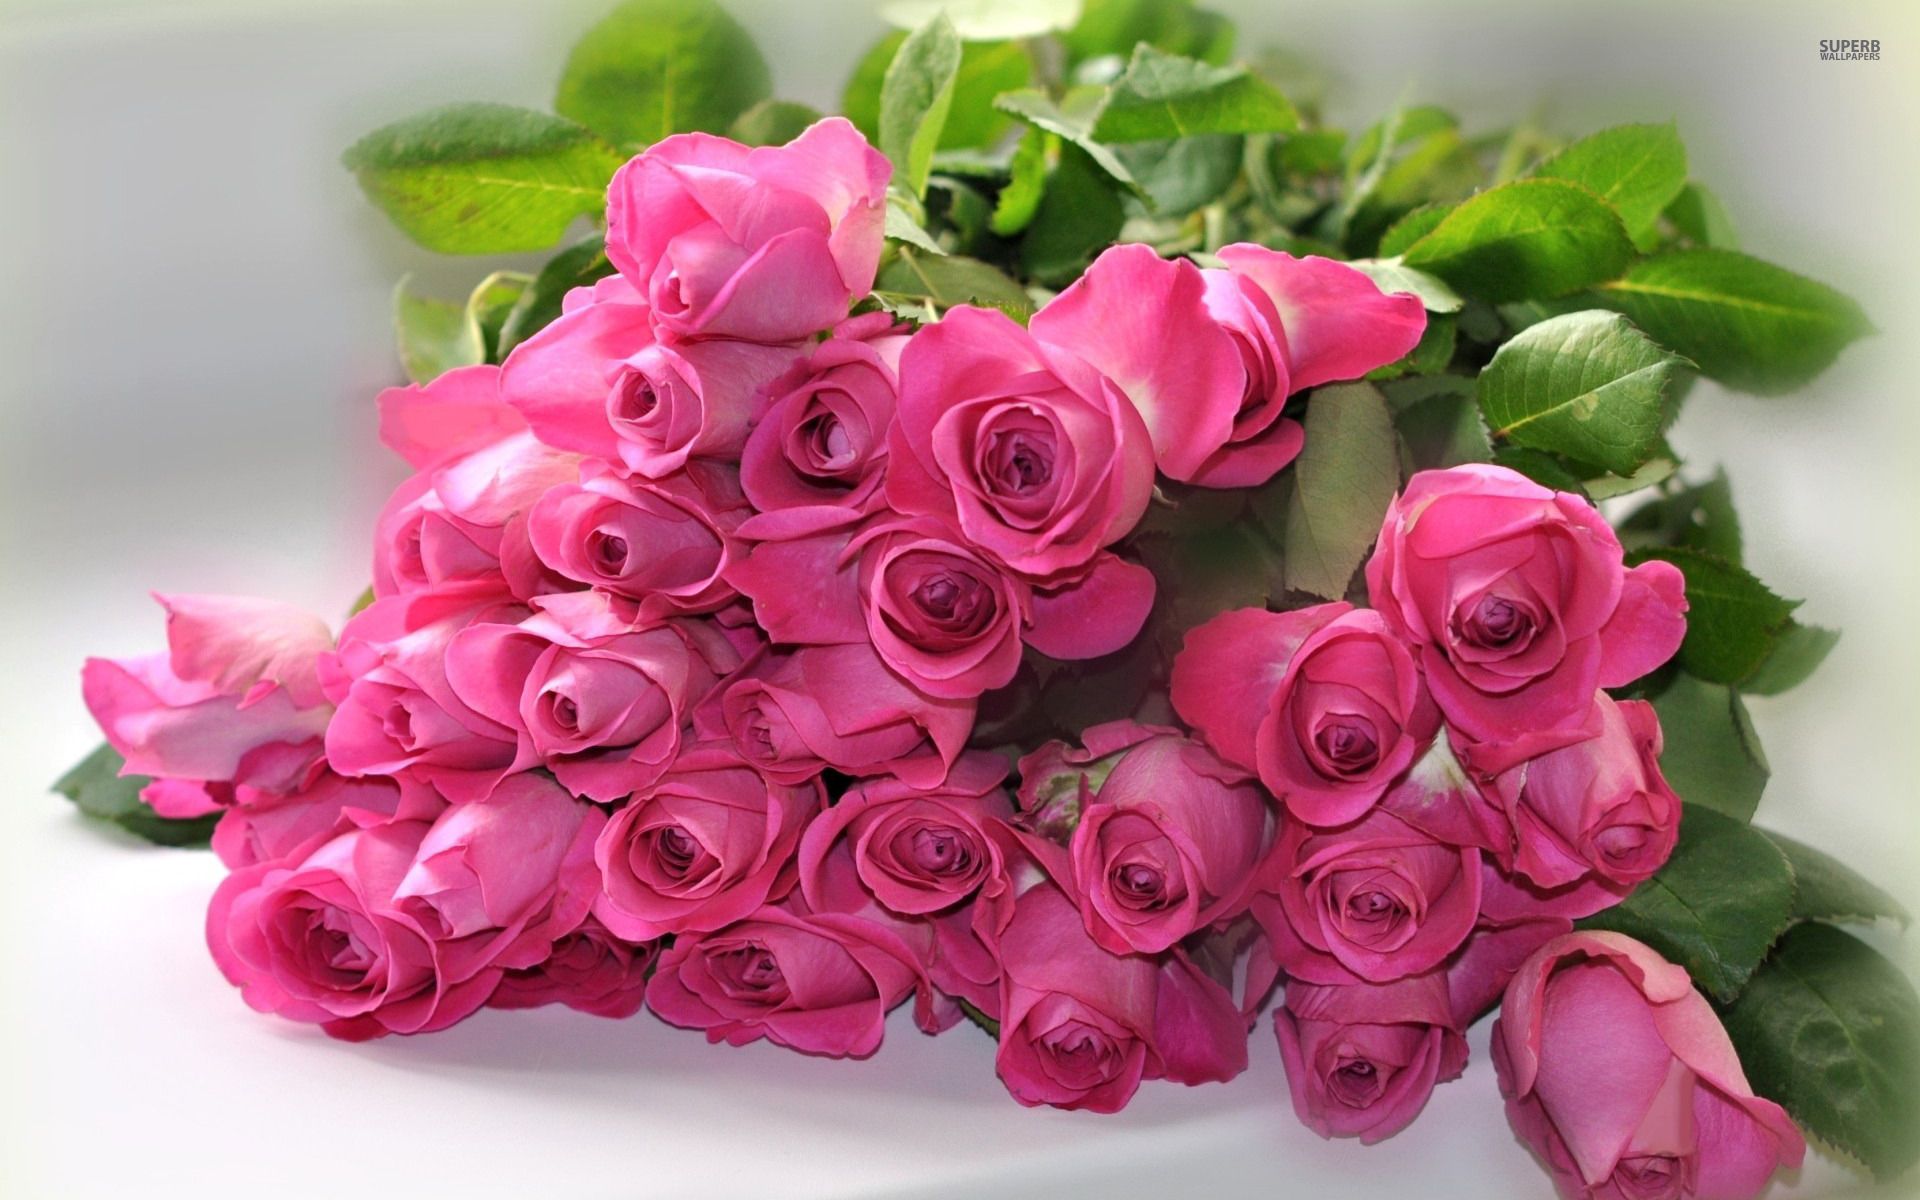 pink-roses-1920x1200.jpg 1,920×1,200 pixels | Wallpapers | Pinterest ...